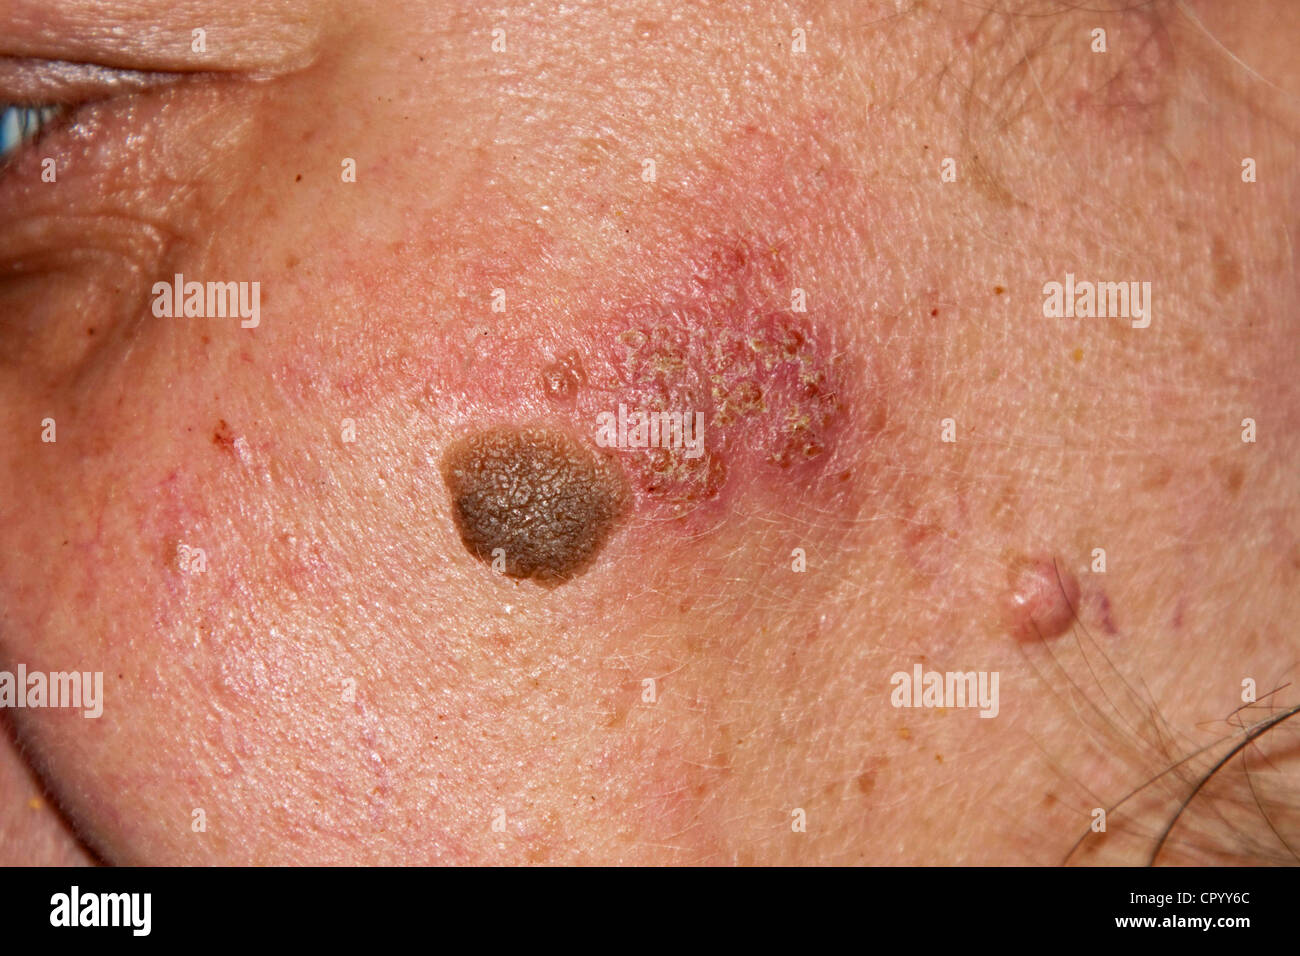 Inflamed skin rash due to a chromium-nickel allergy and seborrheic keratosis, seborrheic verruca or senile wart on the face of a Stock Photo